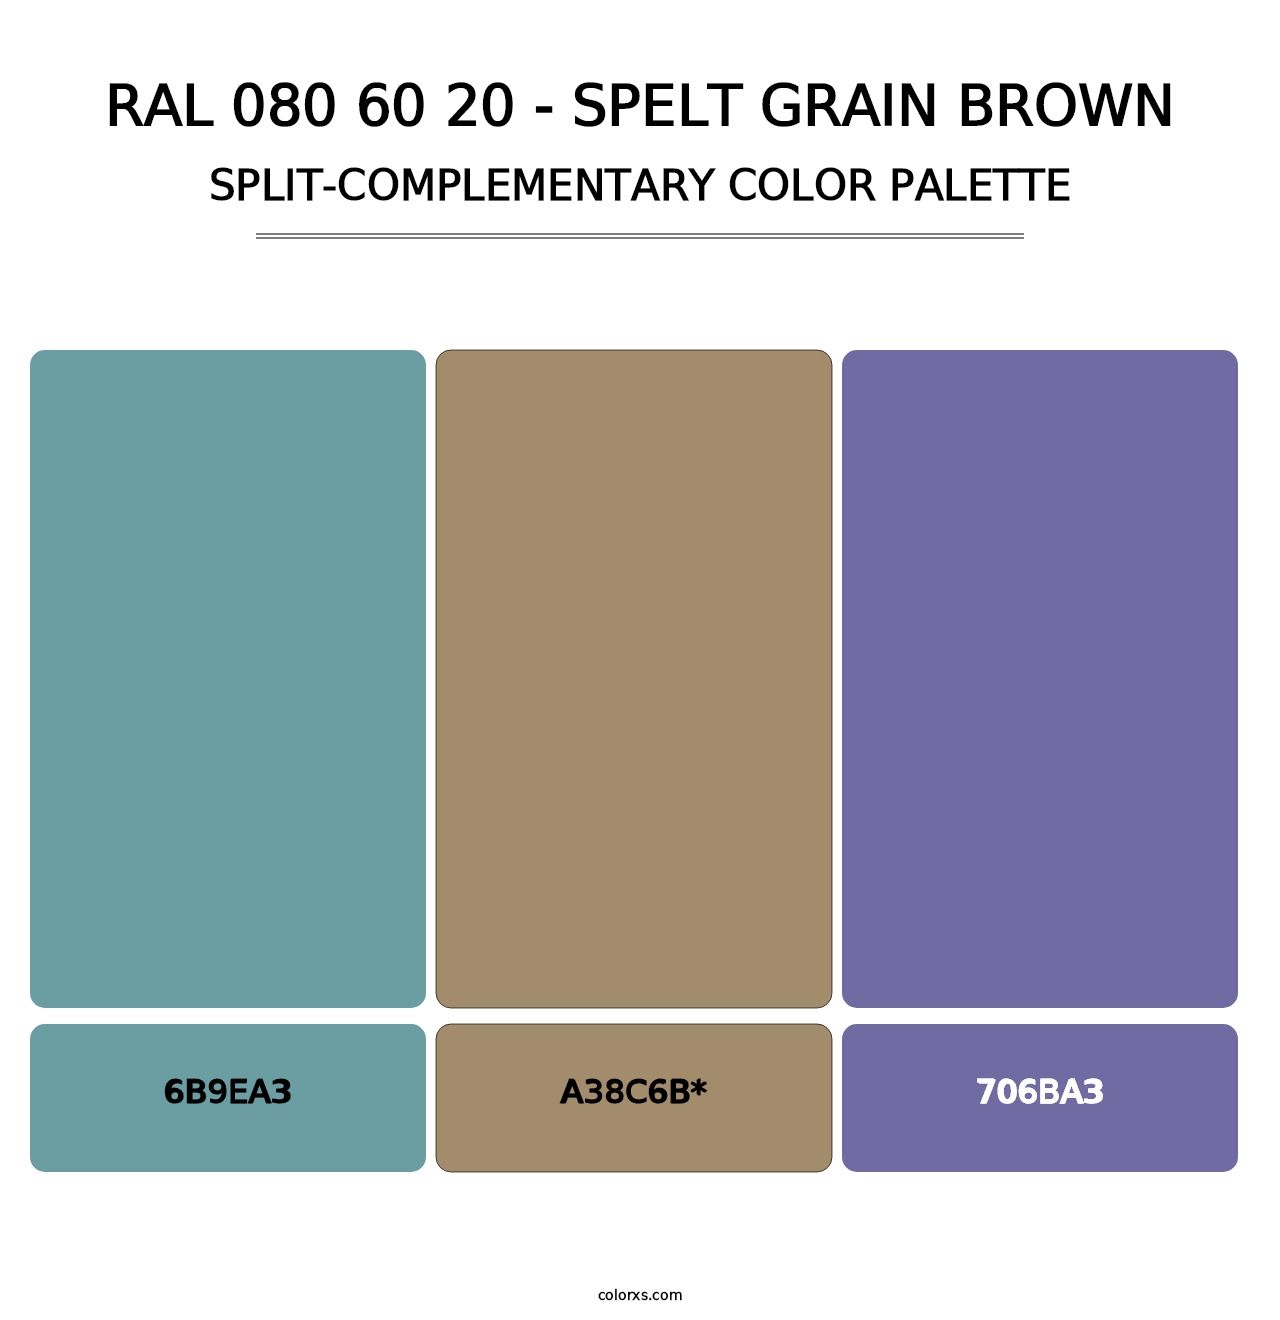 RAL 080 60 20 - Spelt Grain Brown - Split-Complementary Color Palette